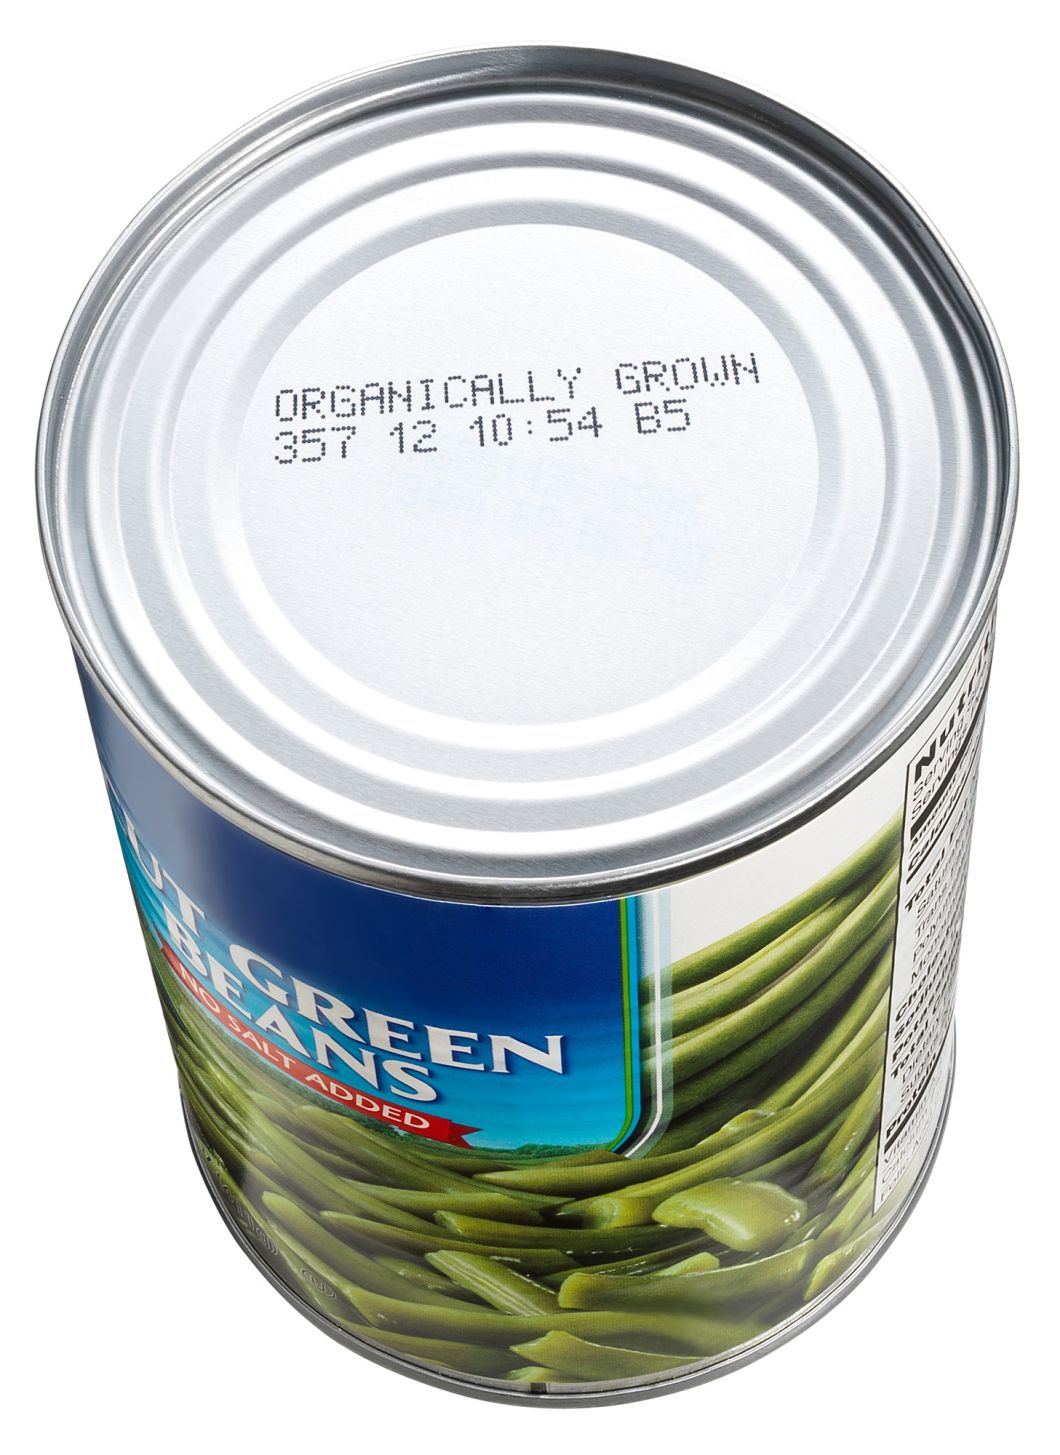 Batch code marked onto tin of green beans using inkjet